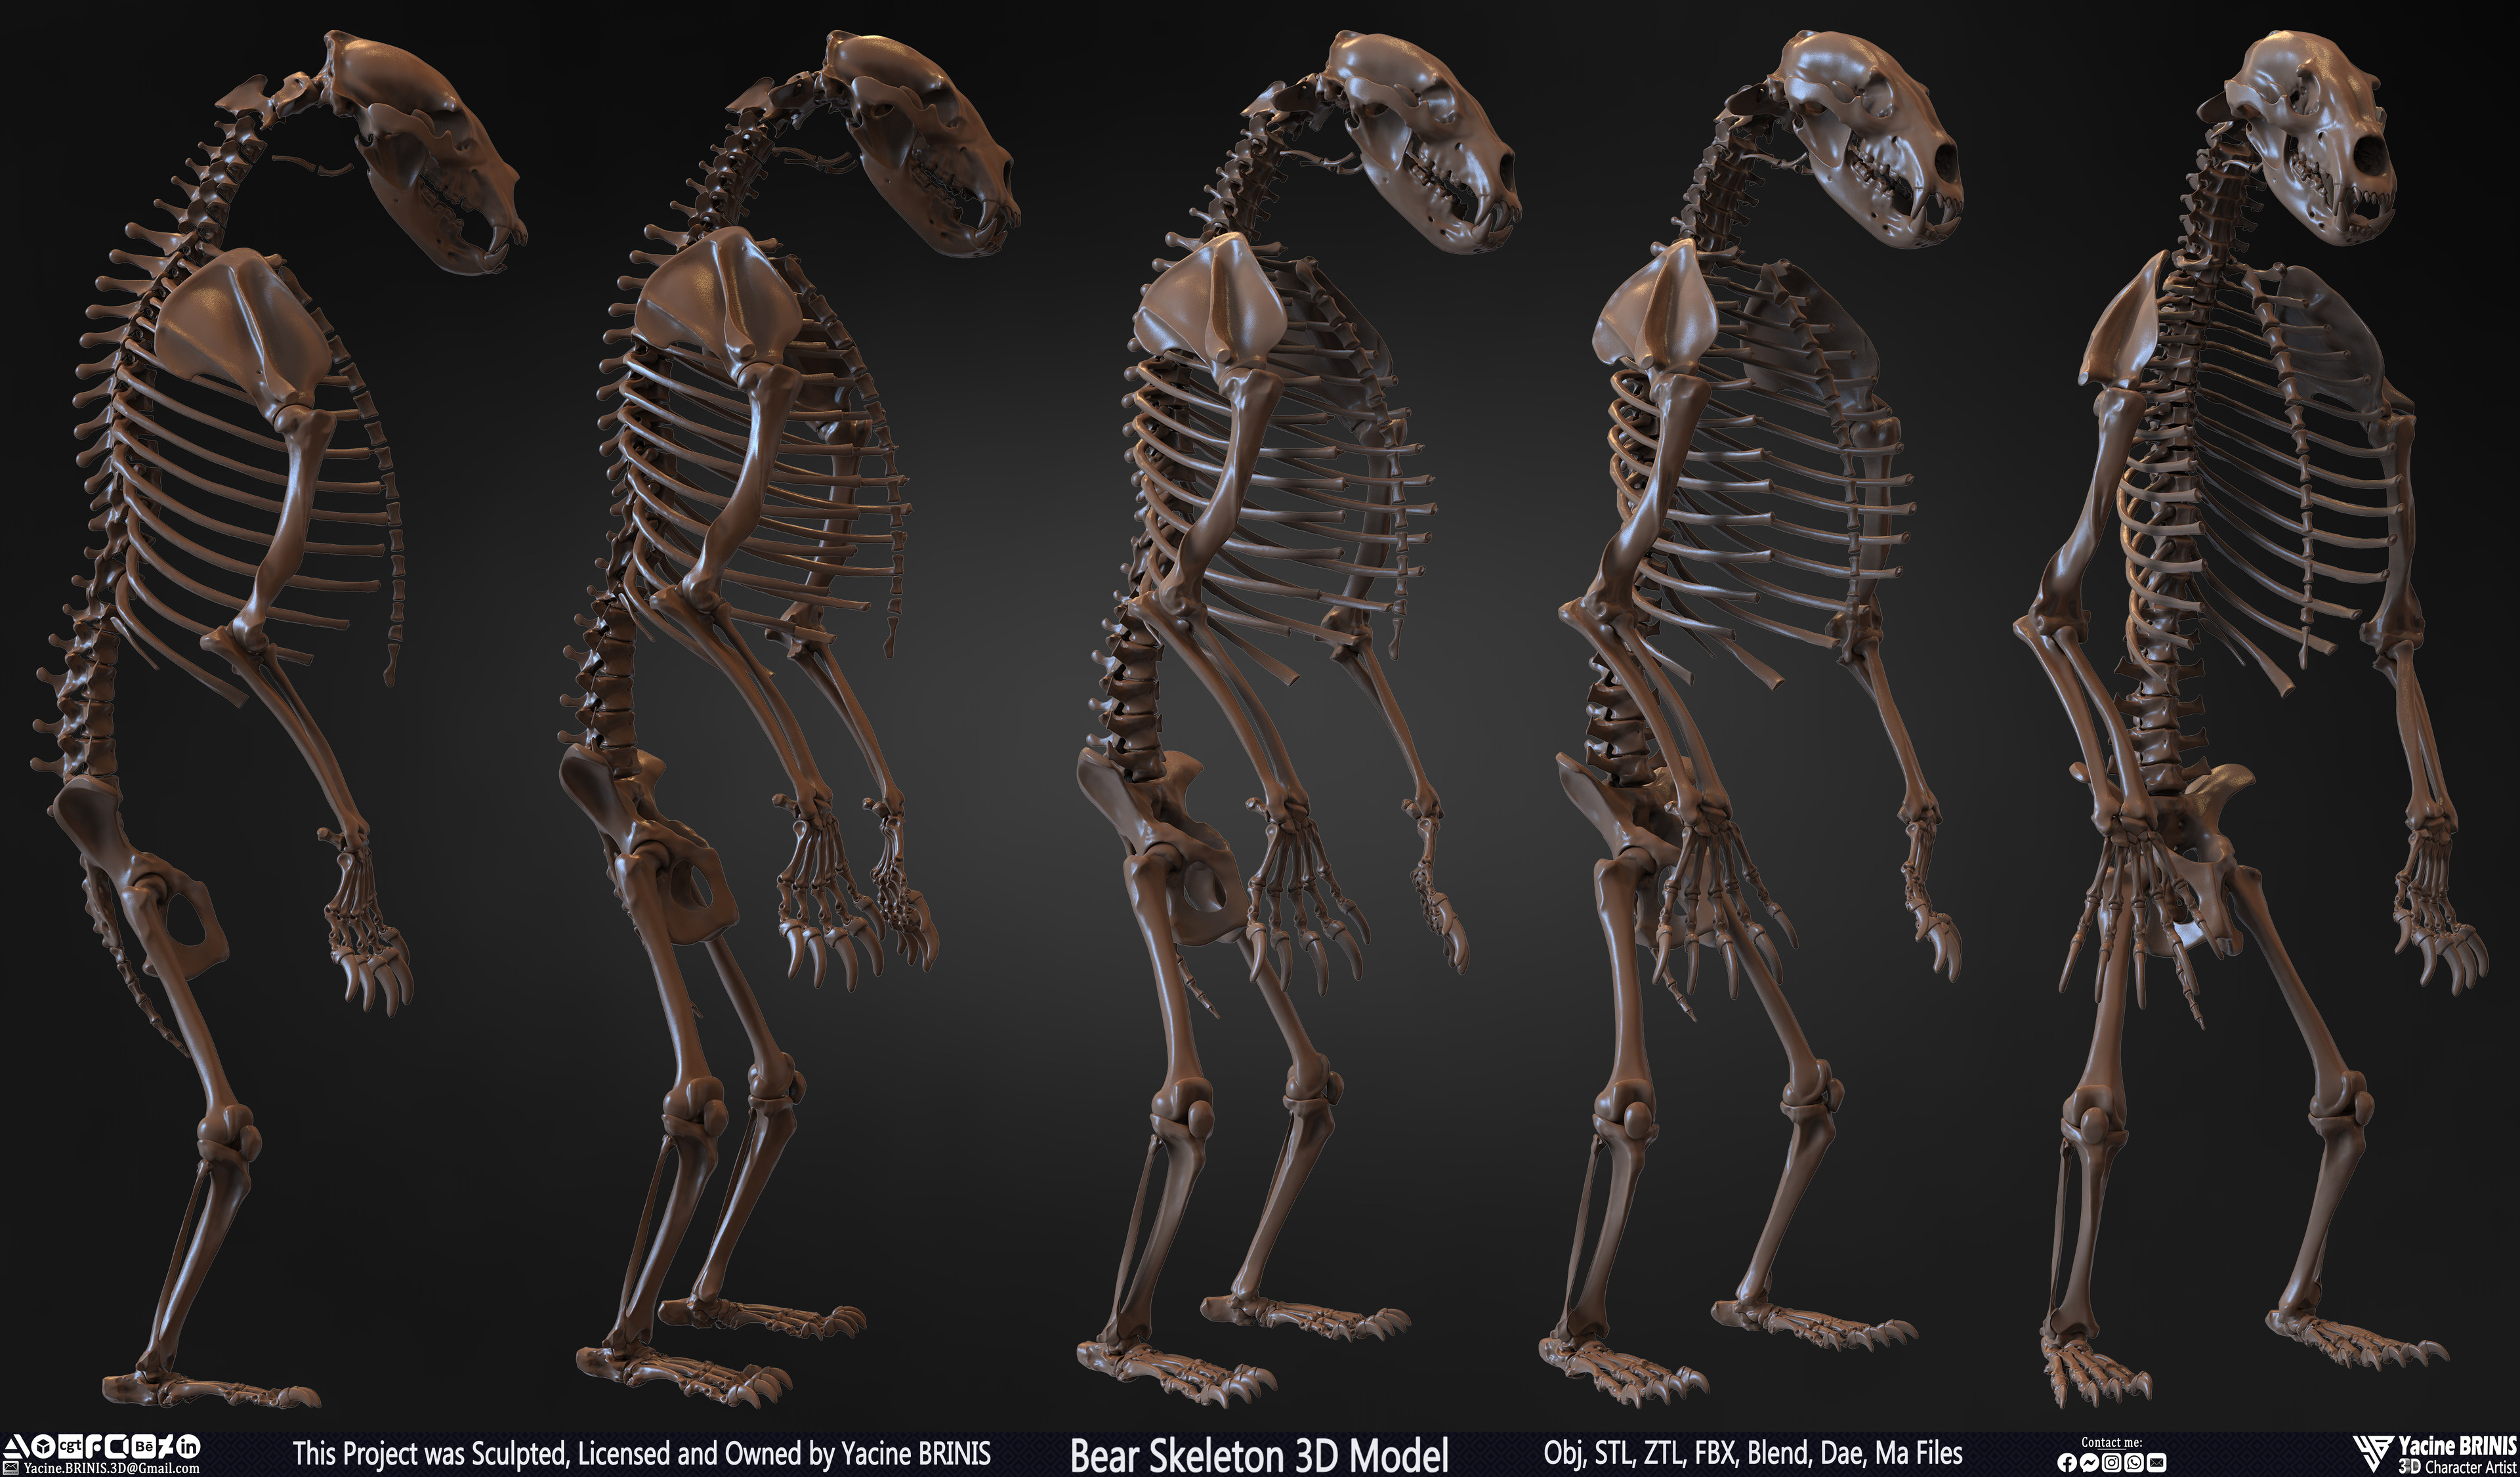 Bear Skeleton 3D Model Sculpted by Yacine BRINIS Set 004